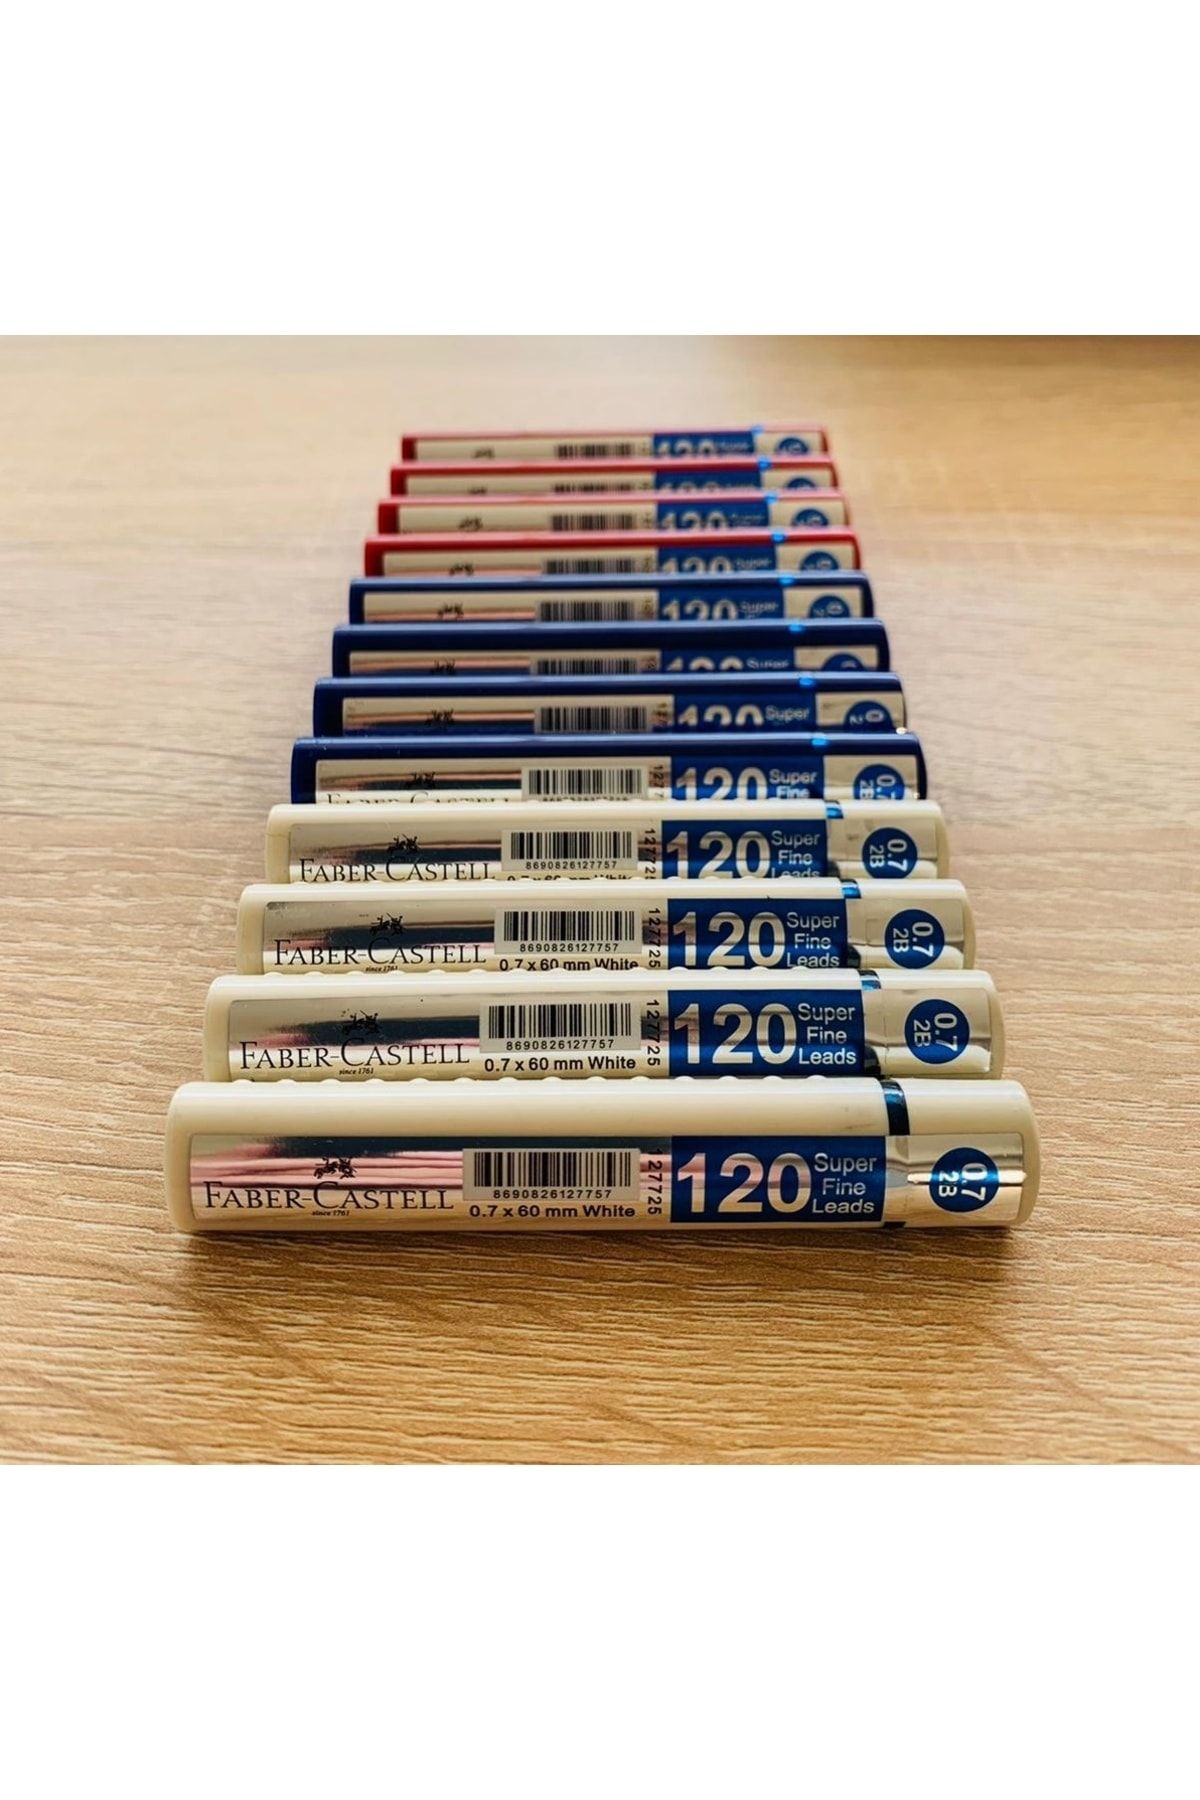 Faber Castell Grip Min Kalem Ucu 0.7 Karışık Renkli Paket 12 Adet (4 Beyaz 4 Mavi 4 Kırmızı)